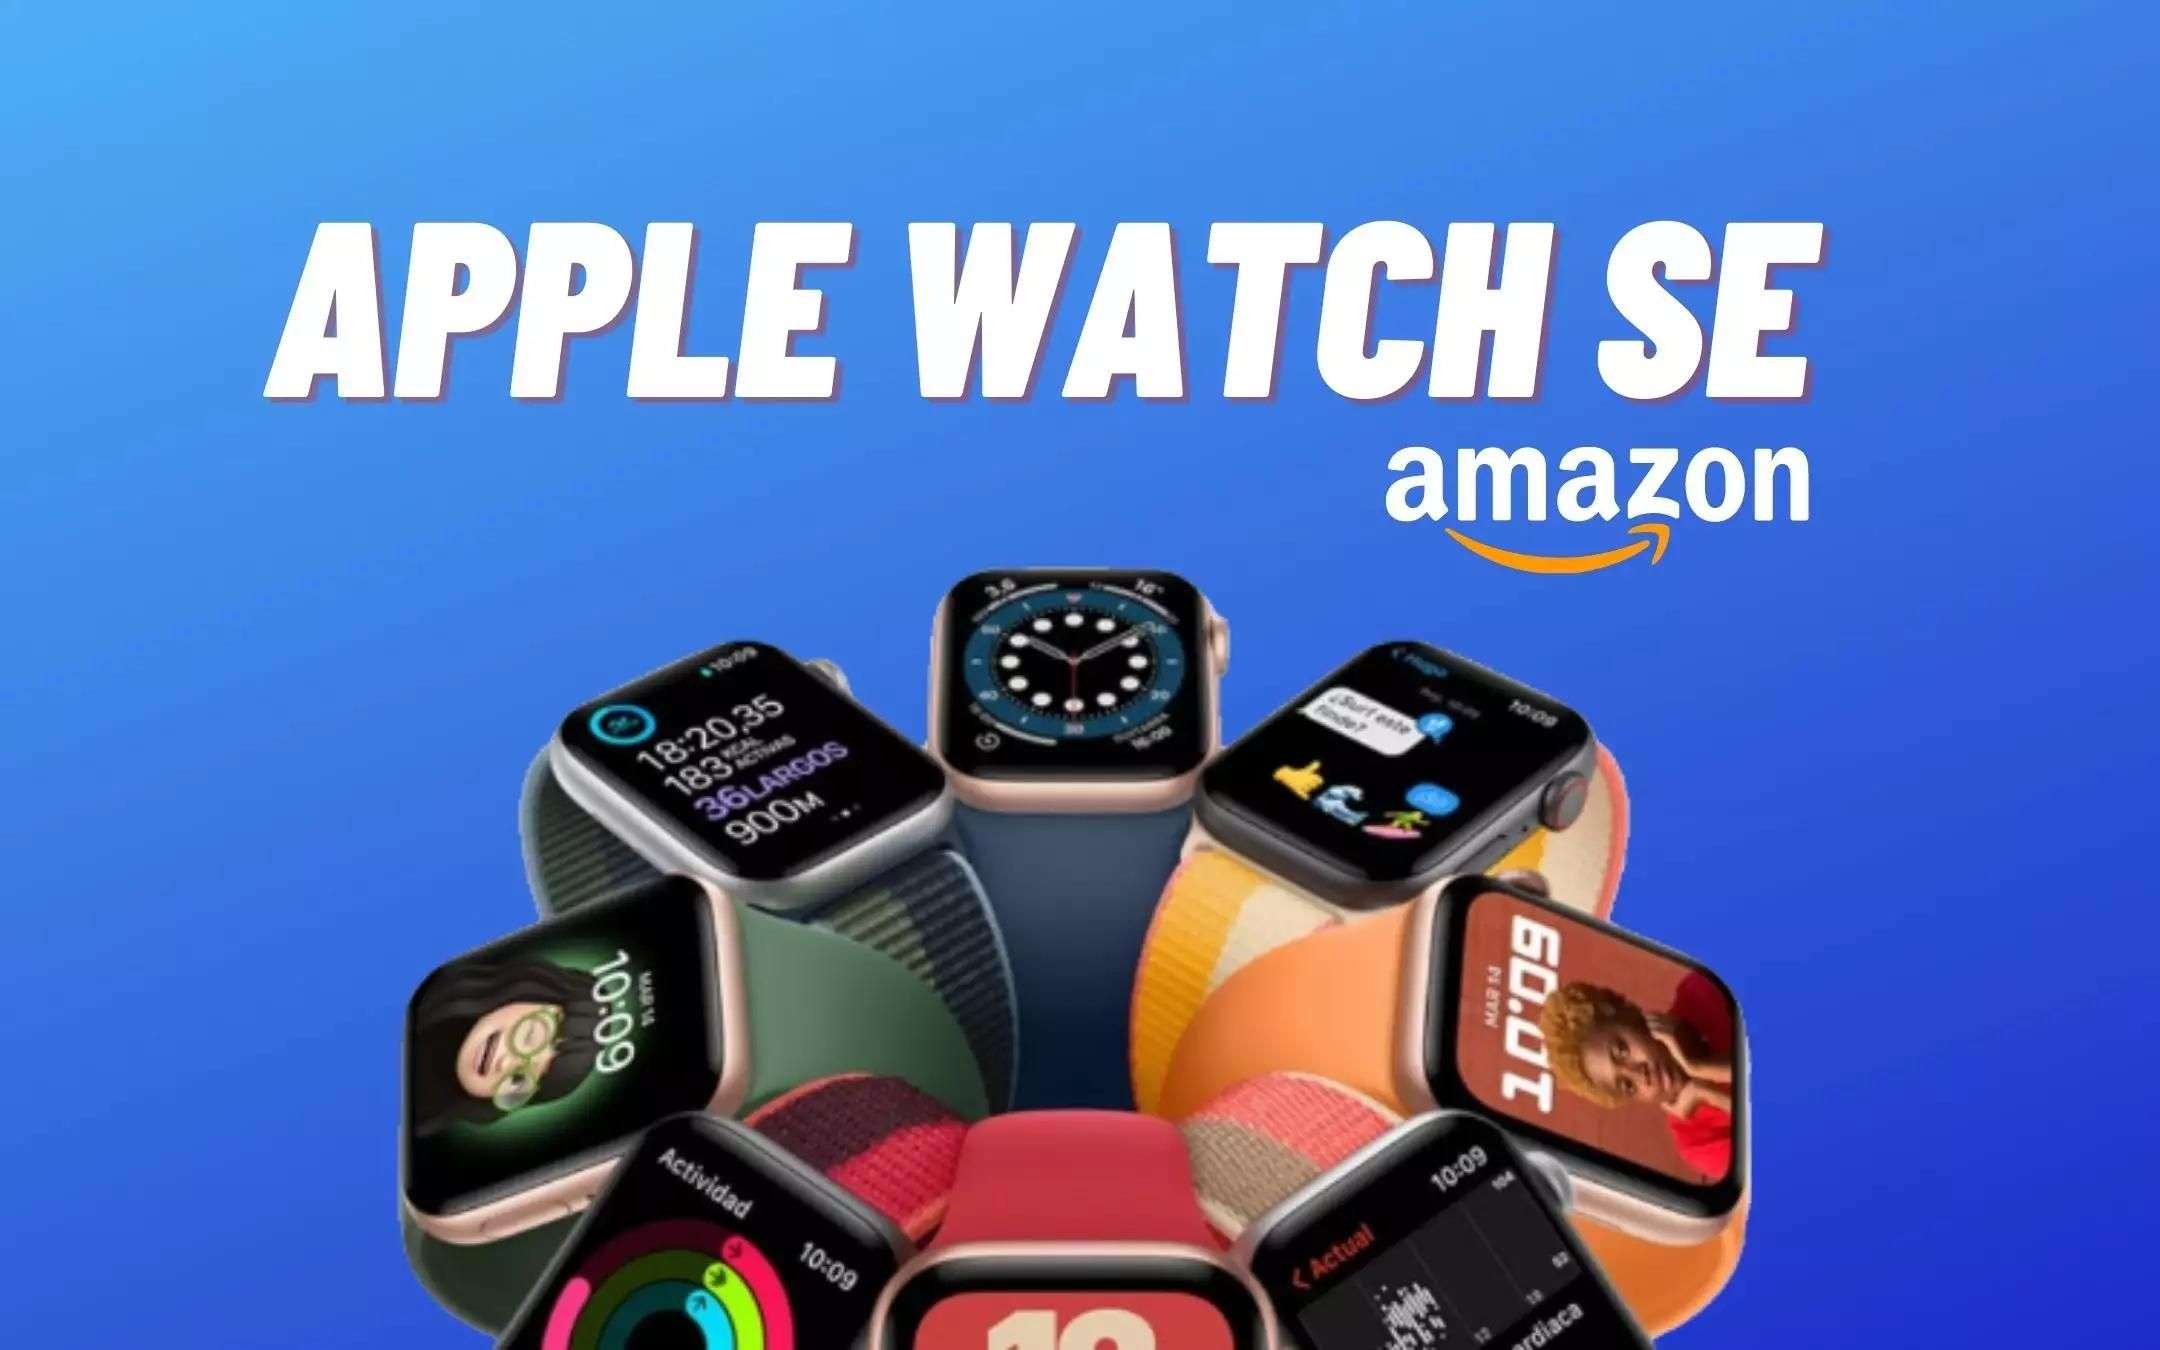 Apple Watch SE (40 mm): FOLLIA ESTIVA, lo paghi pochissimo